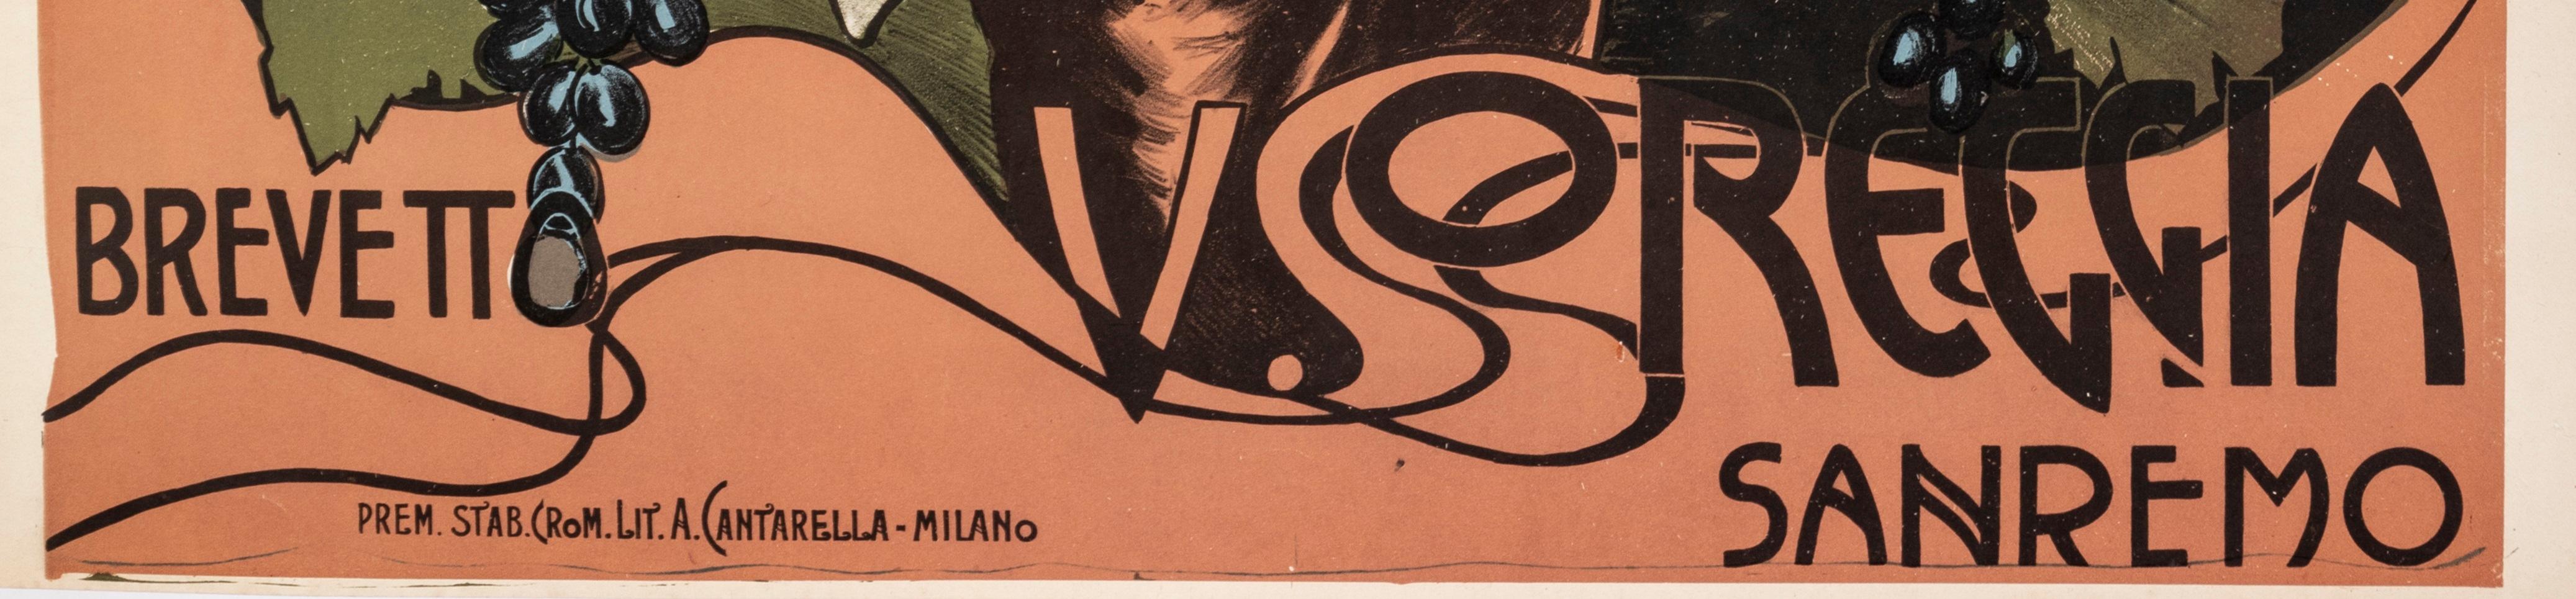 Original Art Nouveau Poster created circa 1910 for the new Oreggia sulfur machine.

Artist: Horst Mundschitz
Title: Nueva Zolforatrice
Date: circa 1910
Size (w x h): 29.9 x 39.4 in / 76 x 100 cm
Printer: Prem. Stab. Crom. Lit. A. Cantarela -